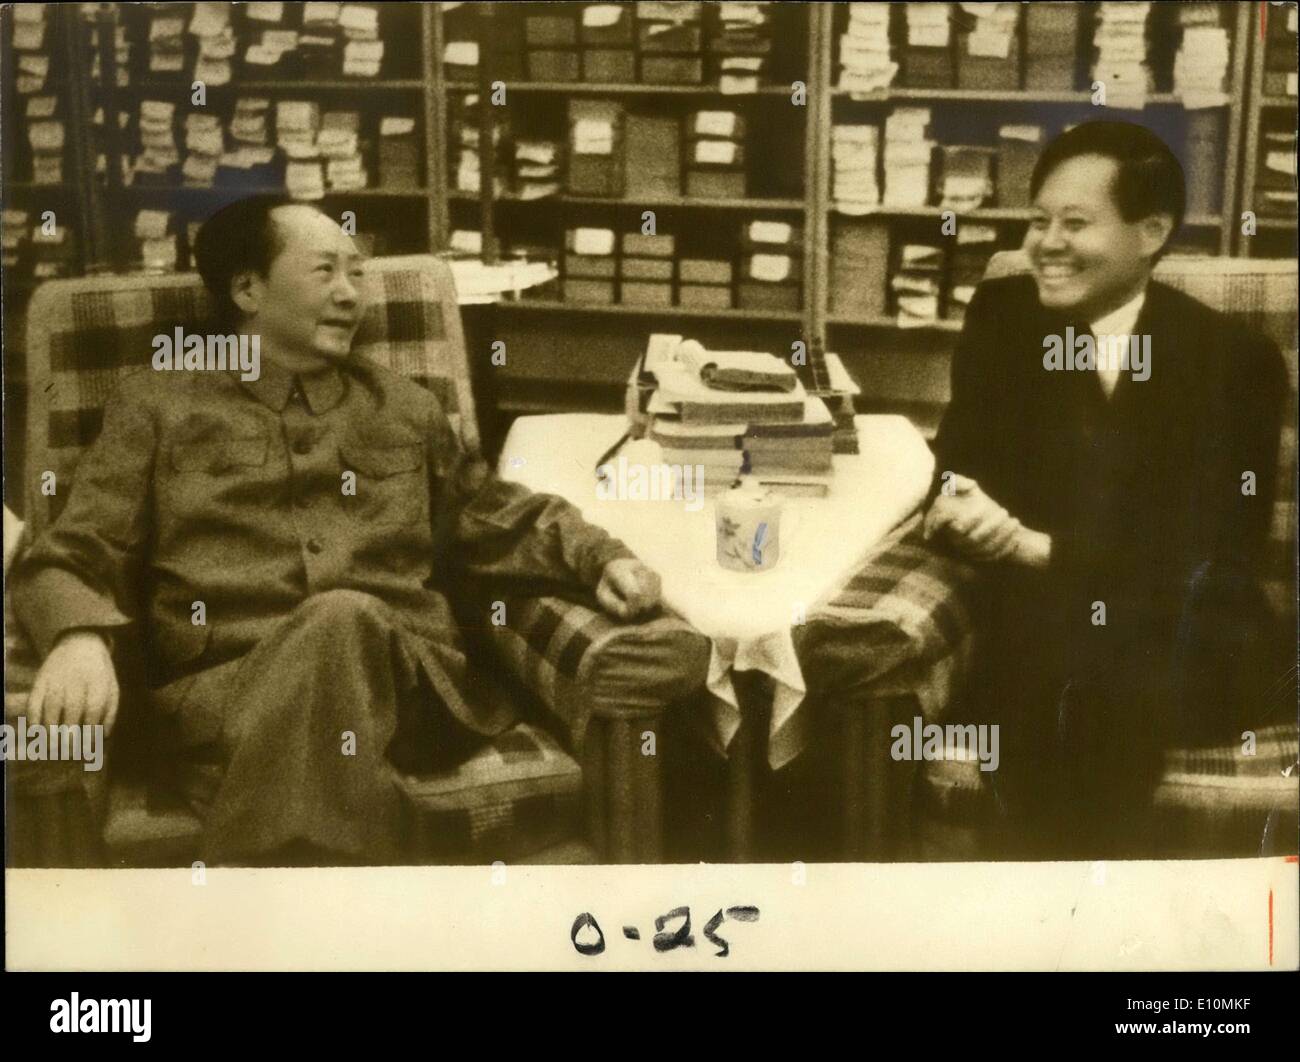 Lug. 25, 1973 - Premio Nobel Yang Chen-Ming con il Presidente Mao Zedong APRESS.com Foto Stock